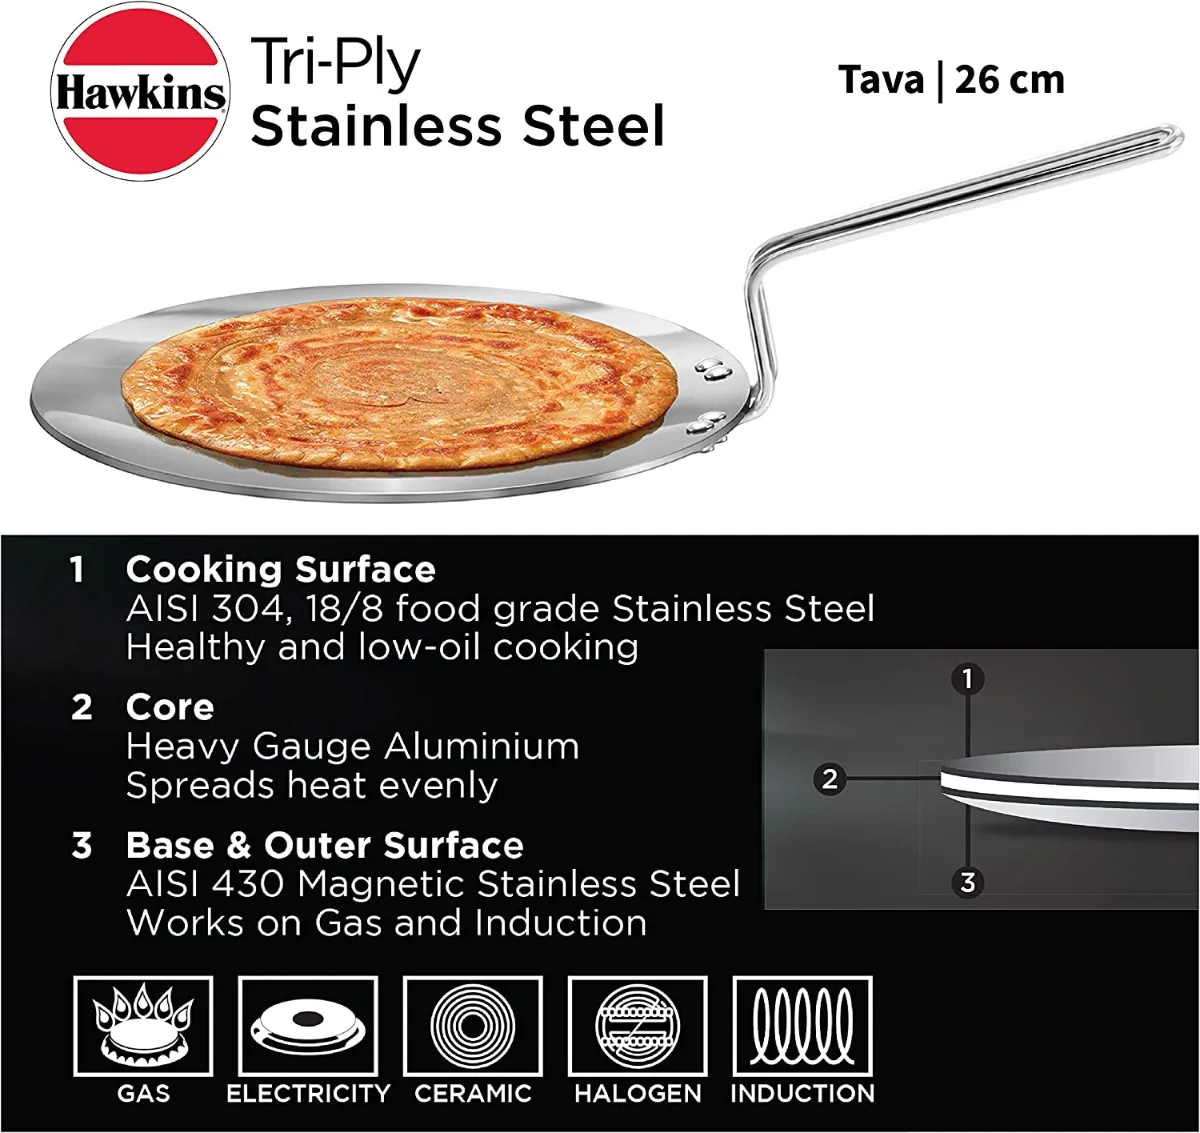 Hawkins Tri-Ply Stainless Steel Tava 26cm1